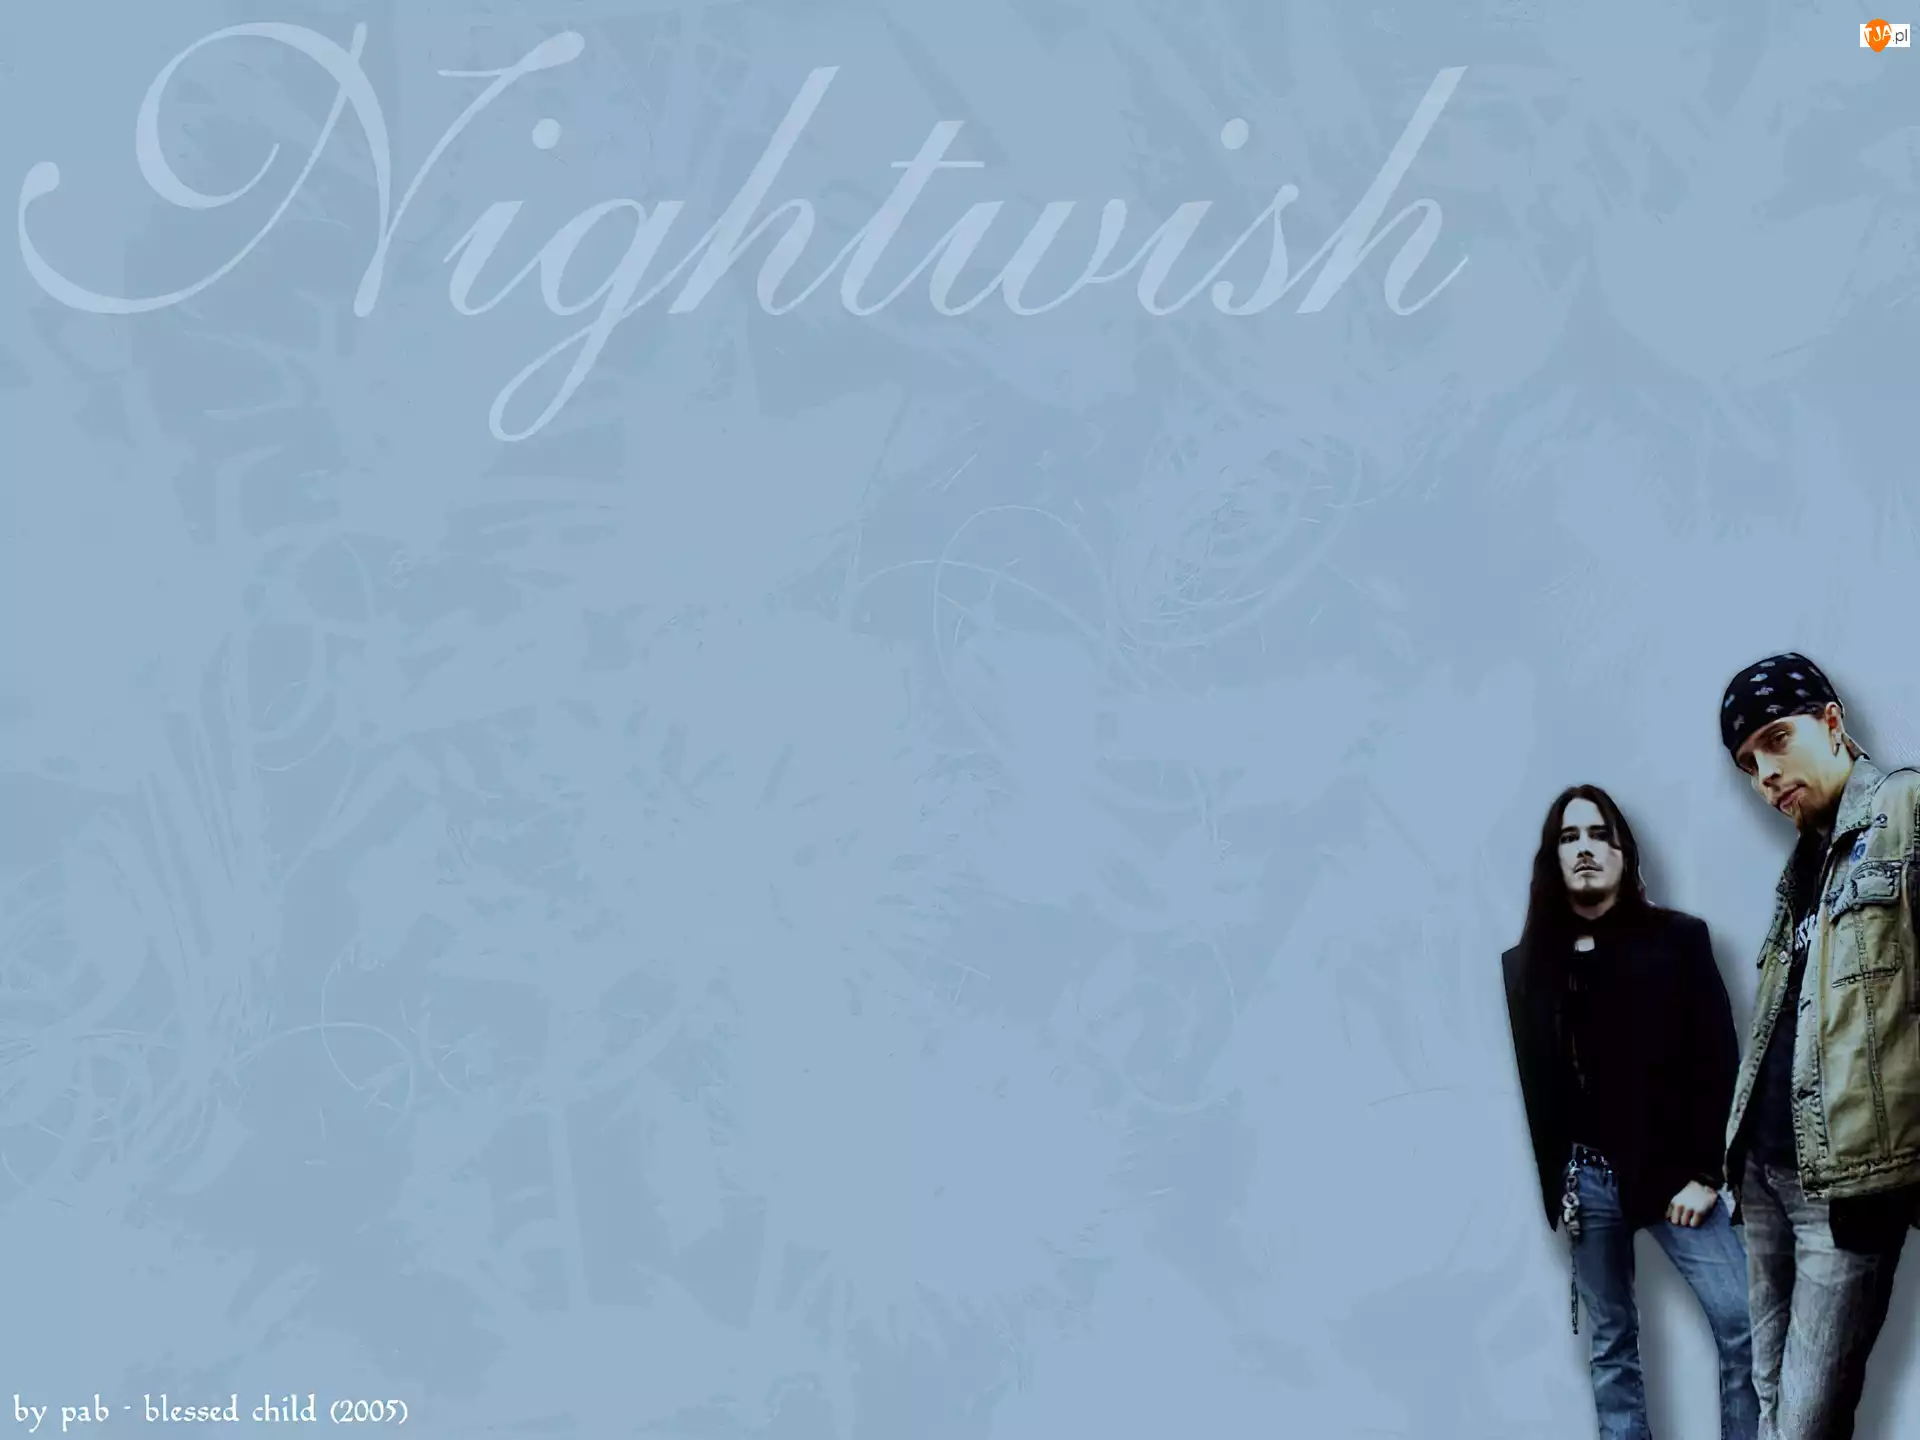 Marco, Nightwish